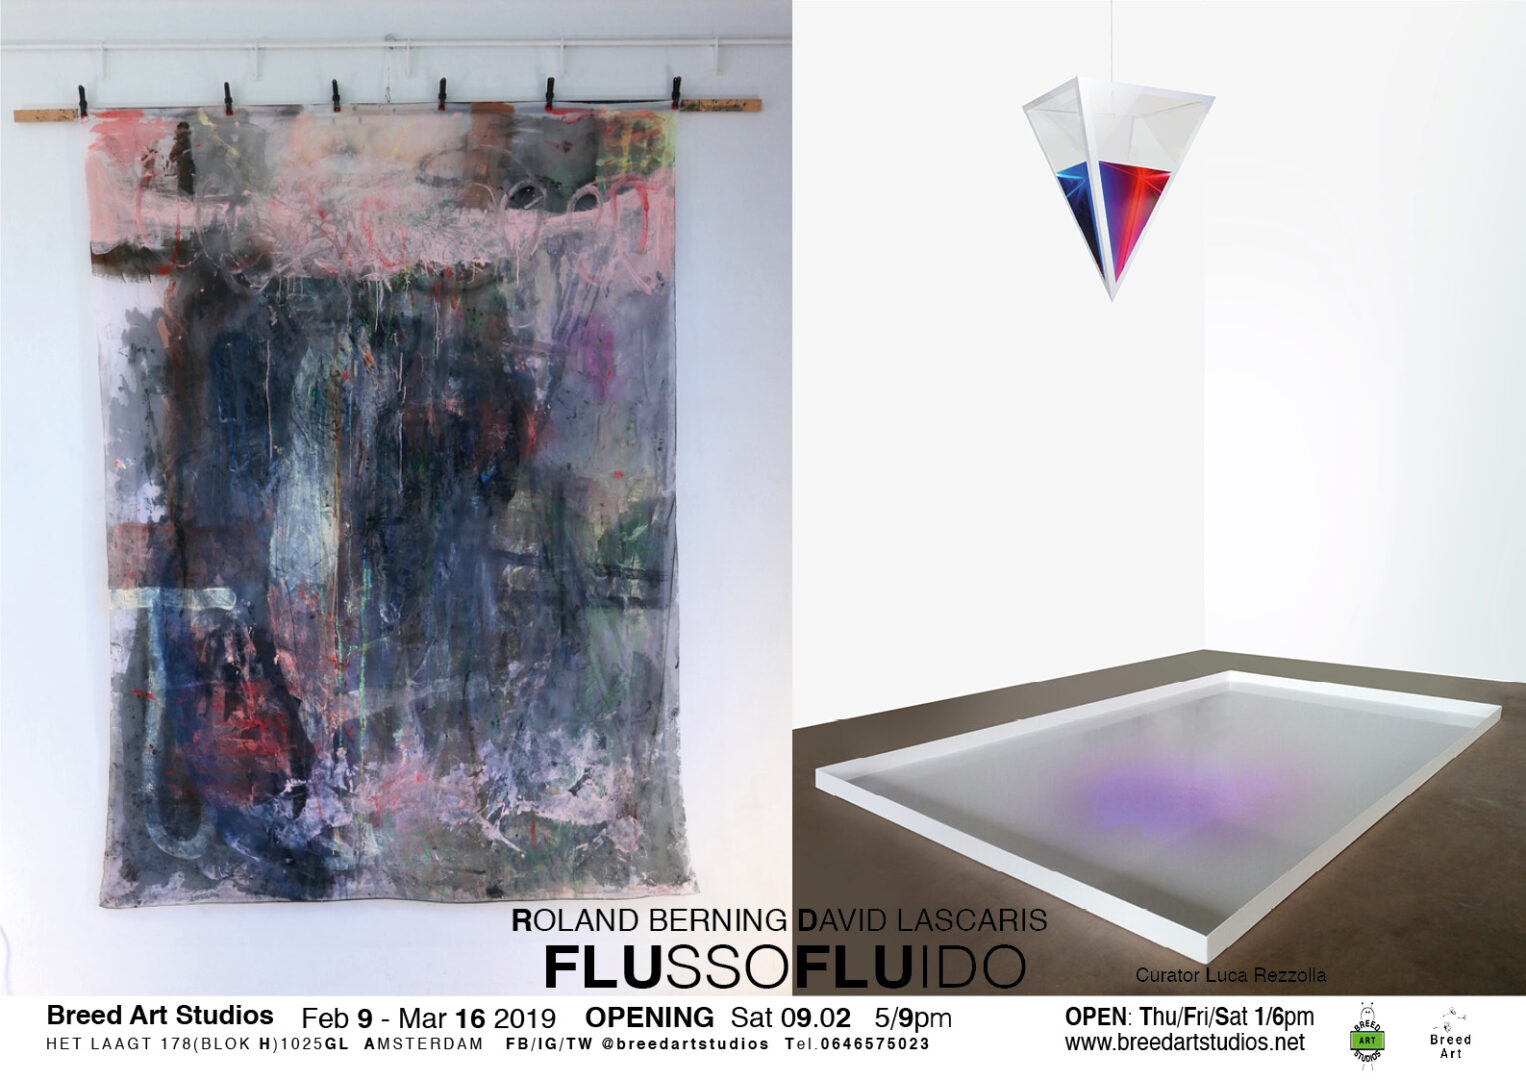 FLUSSOFLUIDO at Breed Art Studios